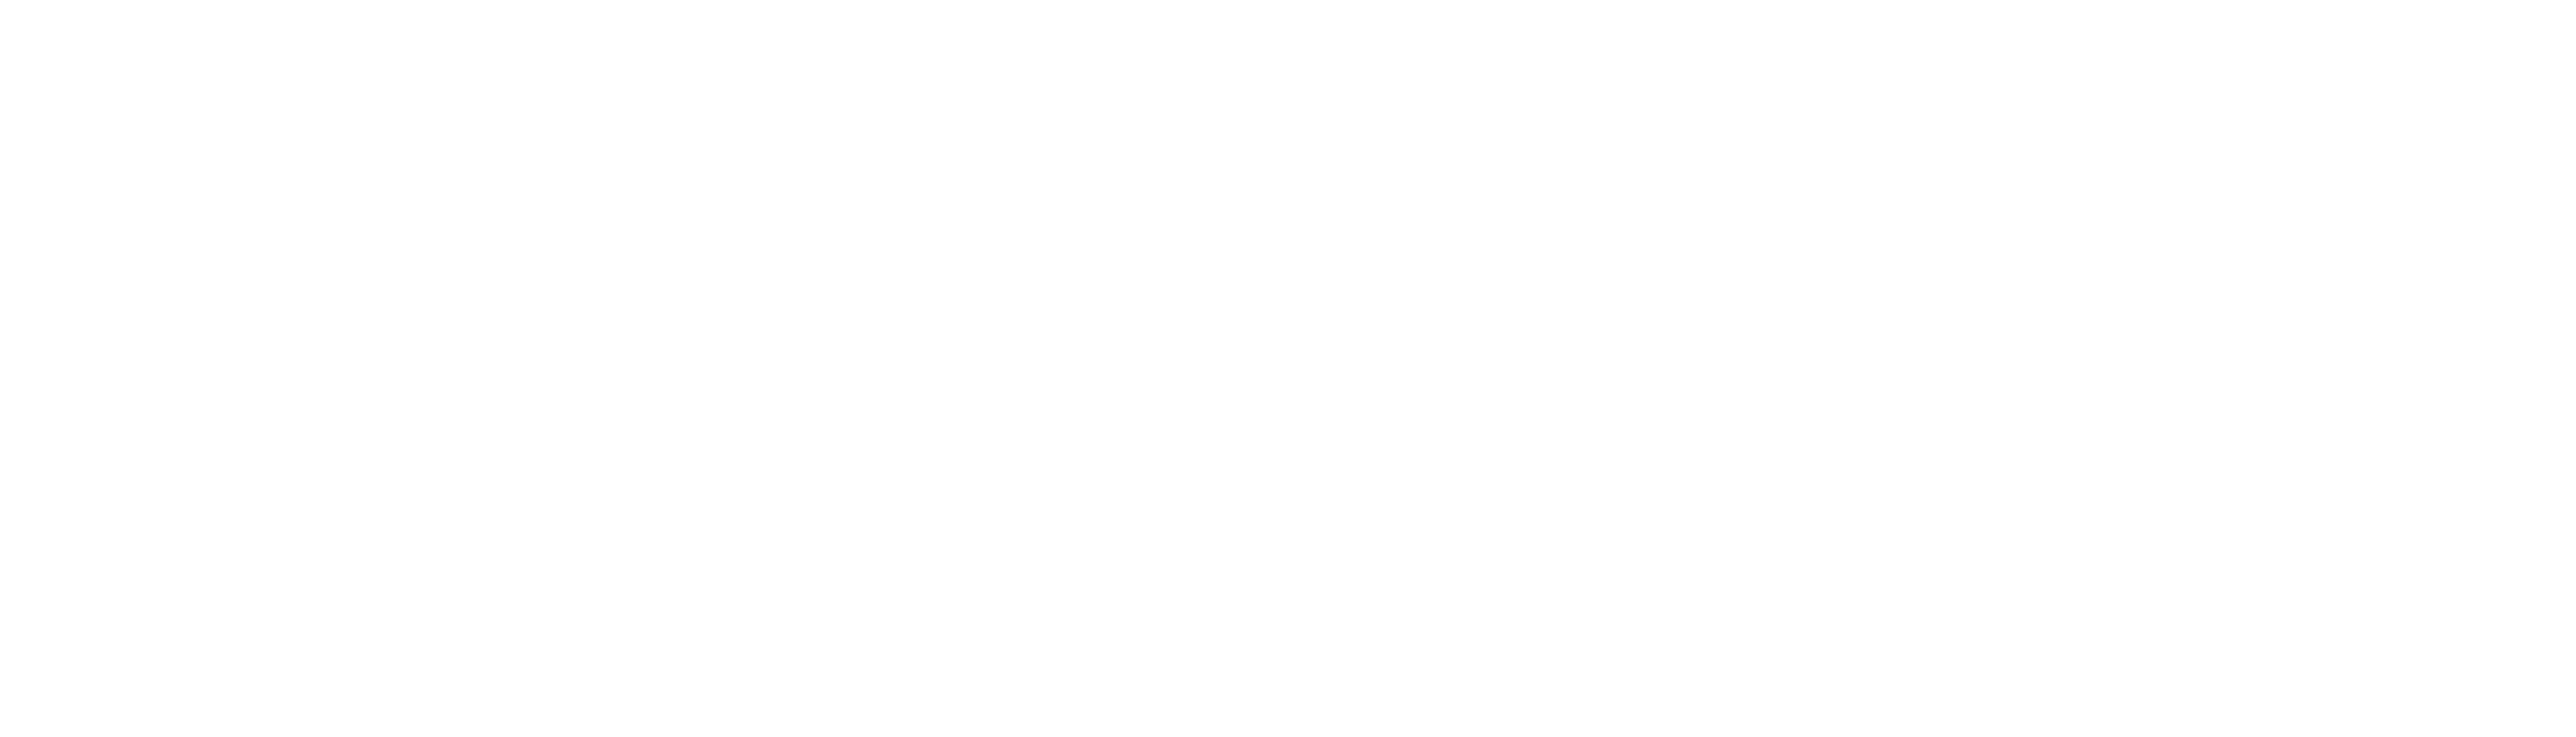 AWS Public Sector Symposium Canberra